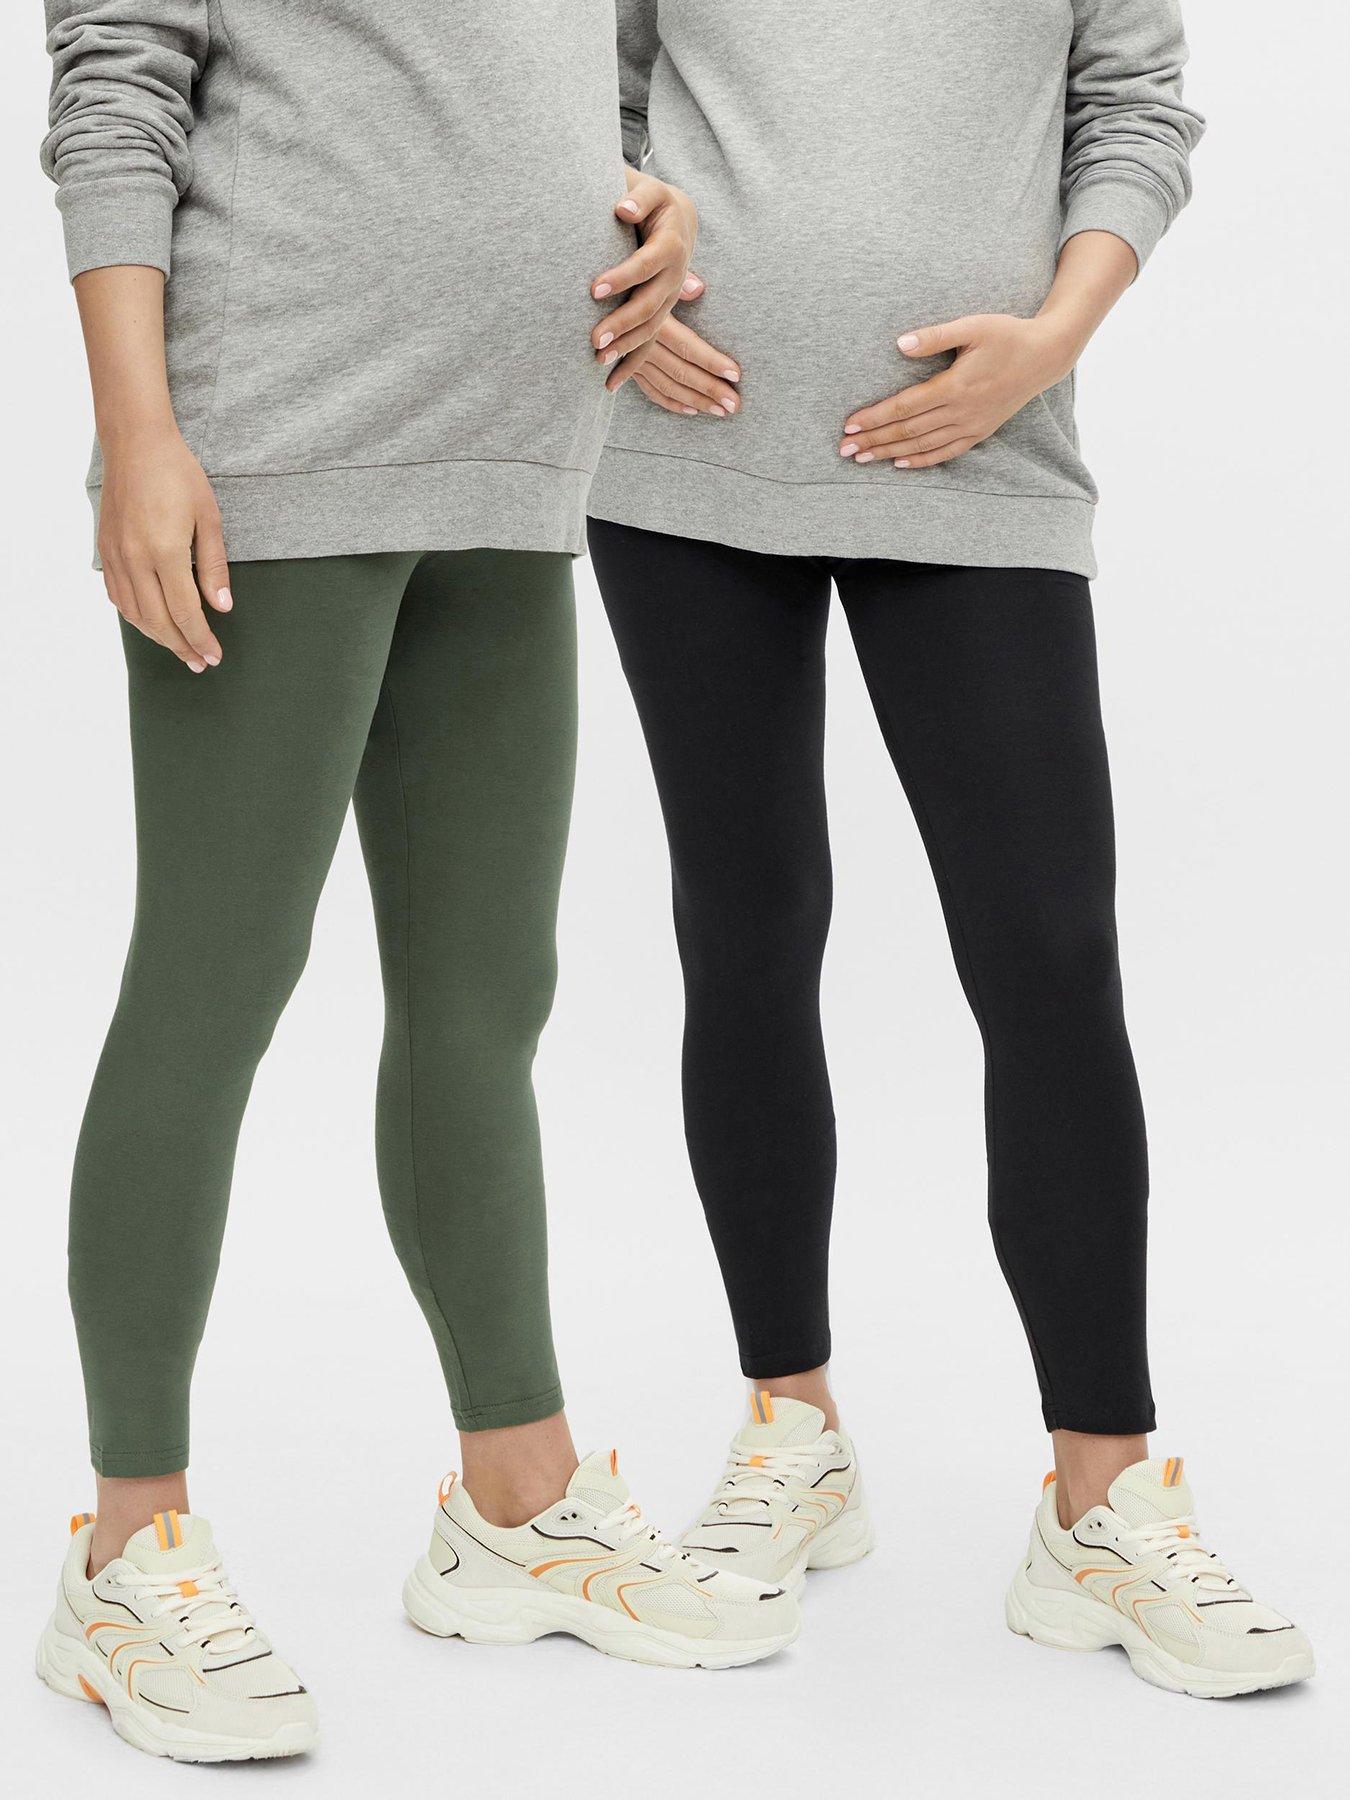 Mamalicious Maternity seamless legging in khaki green - part of a